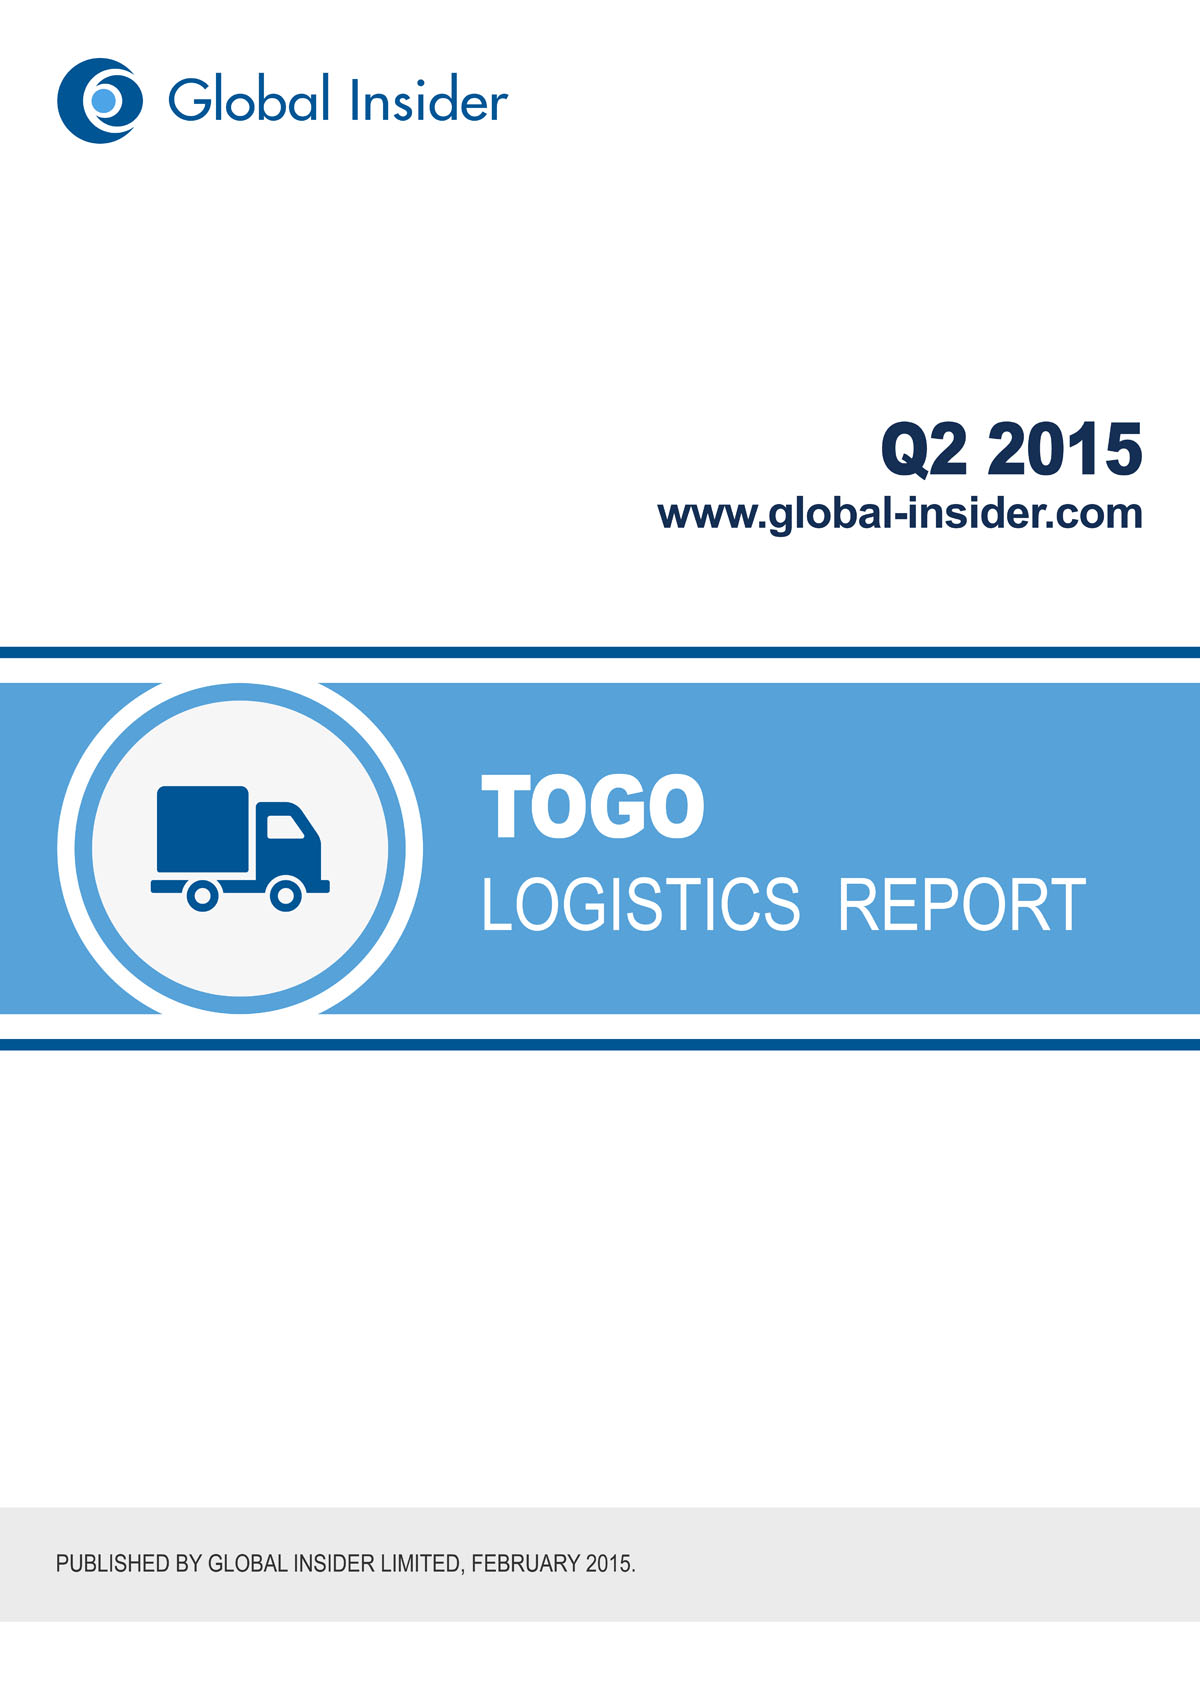 Togo Logistics Report